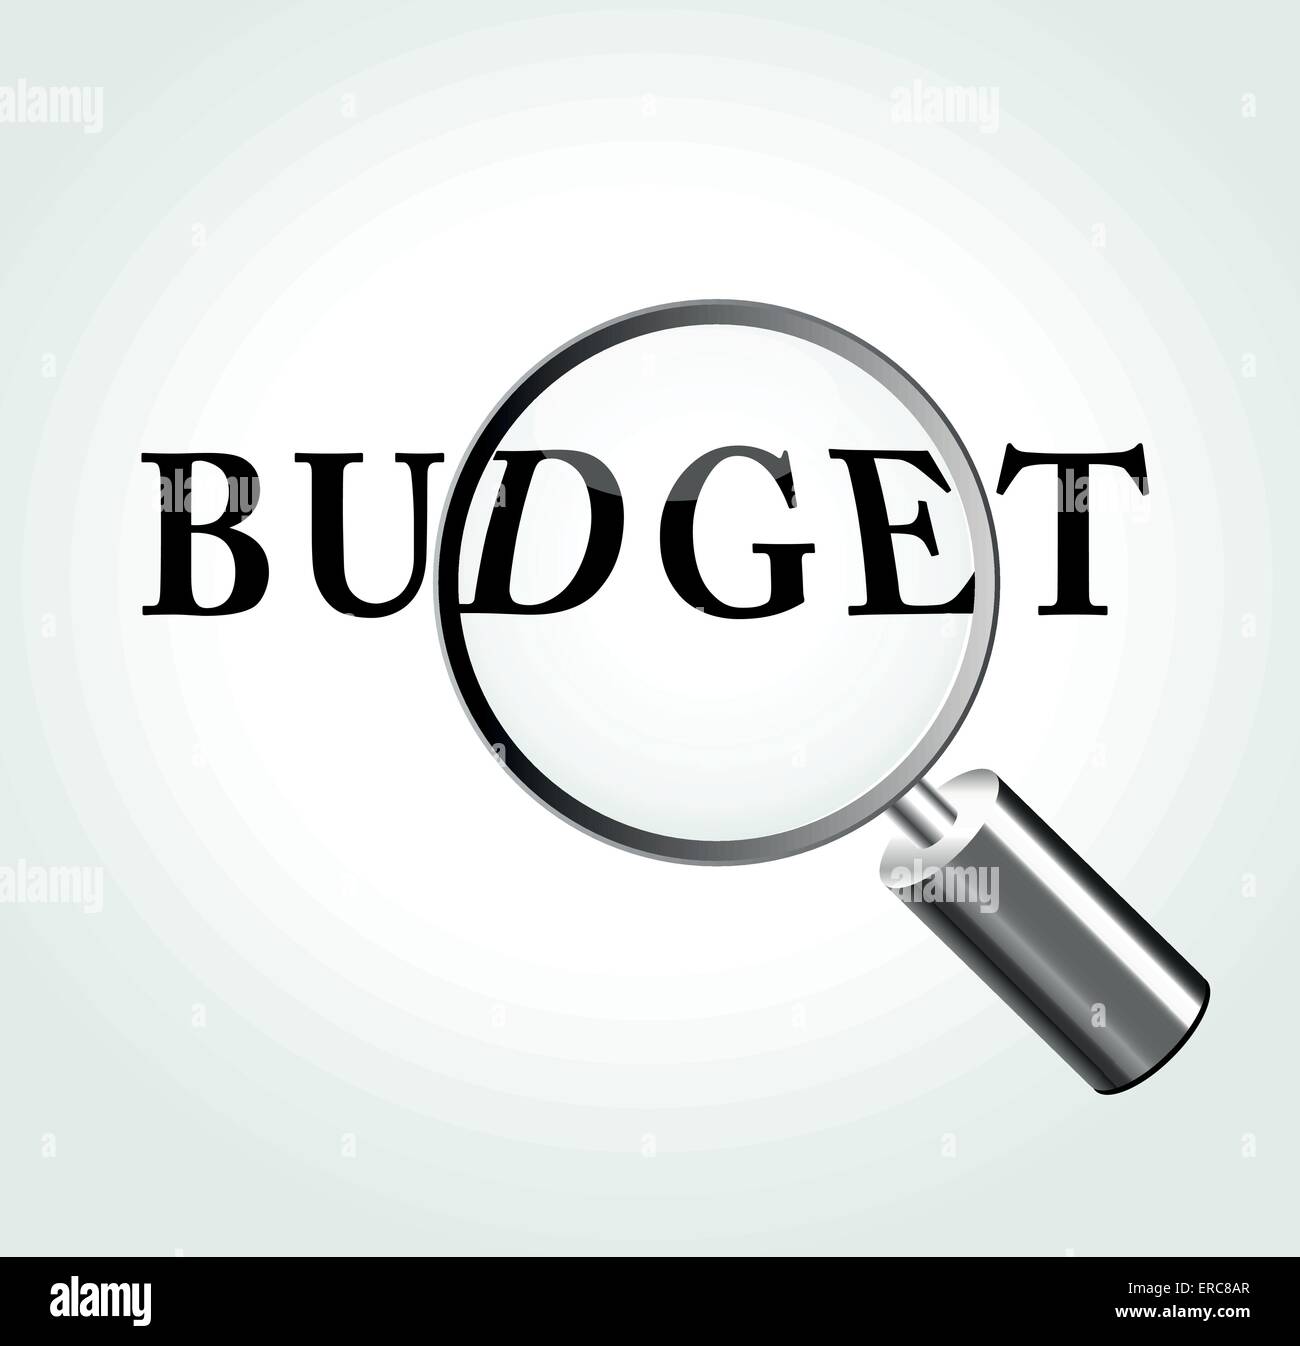 Vektor-Illustration von Budget-Konzept mit Lupe Stock Vektor